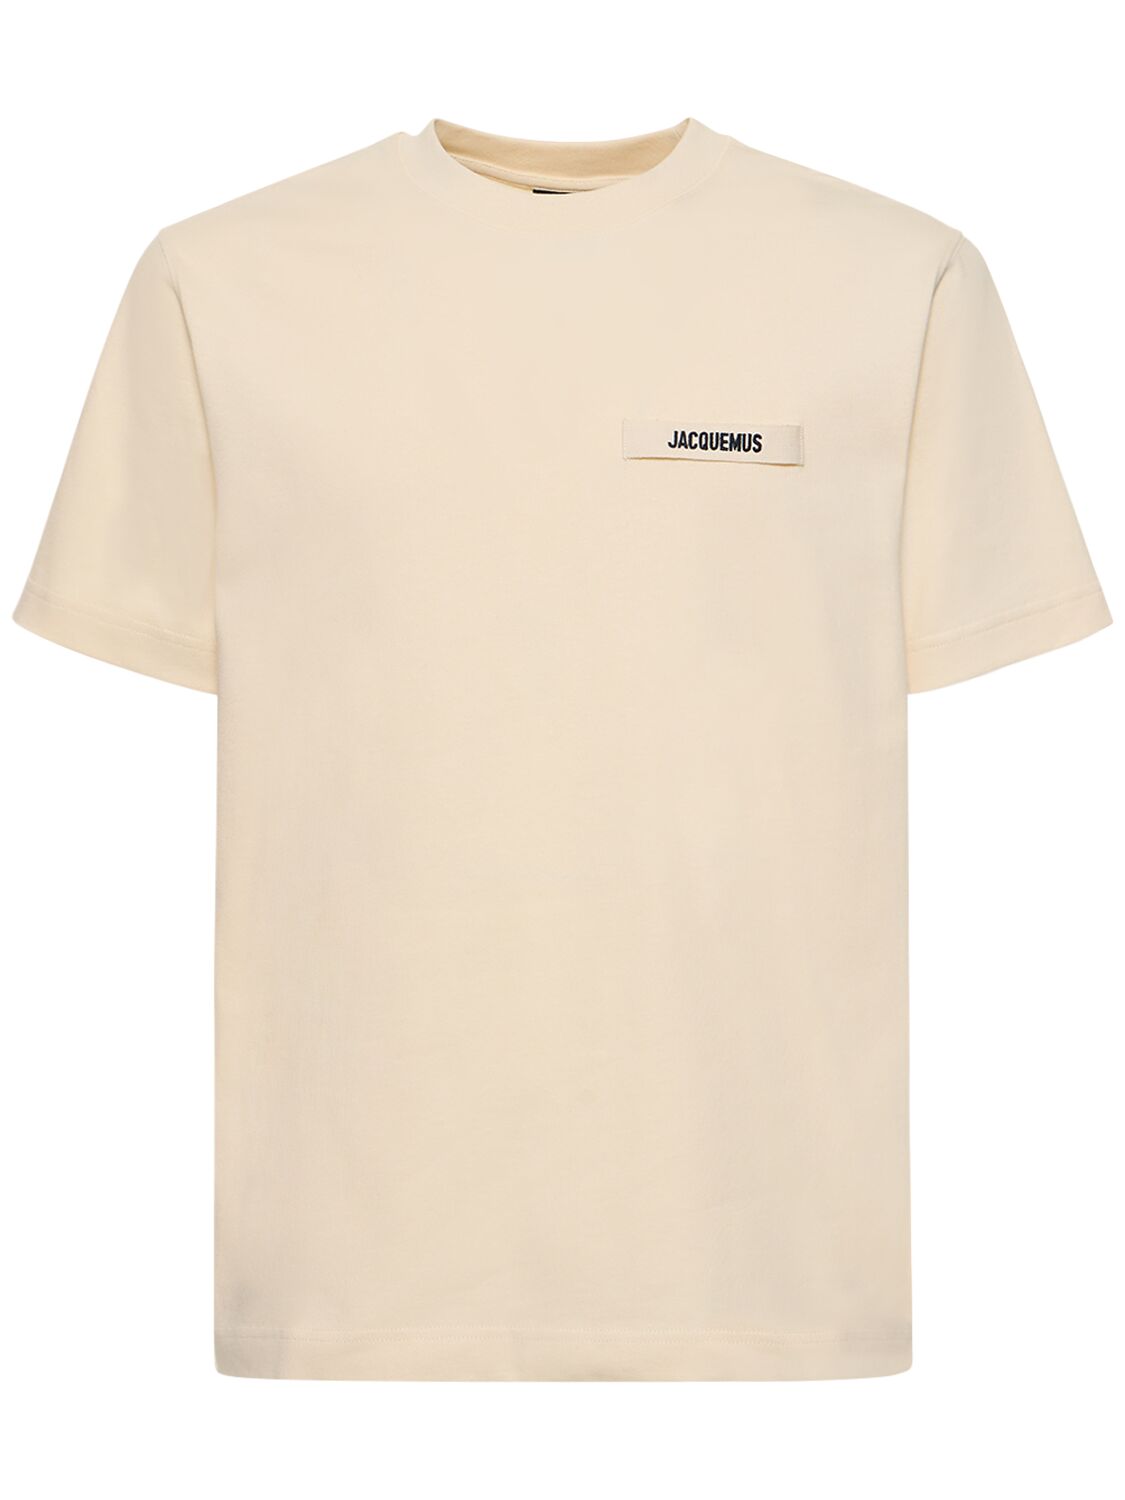 Jacquemus Le Tshirt Gros Grain Cotton T-shirt In Beige